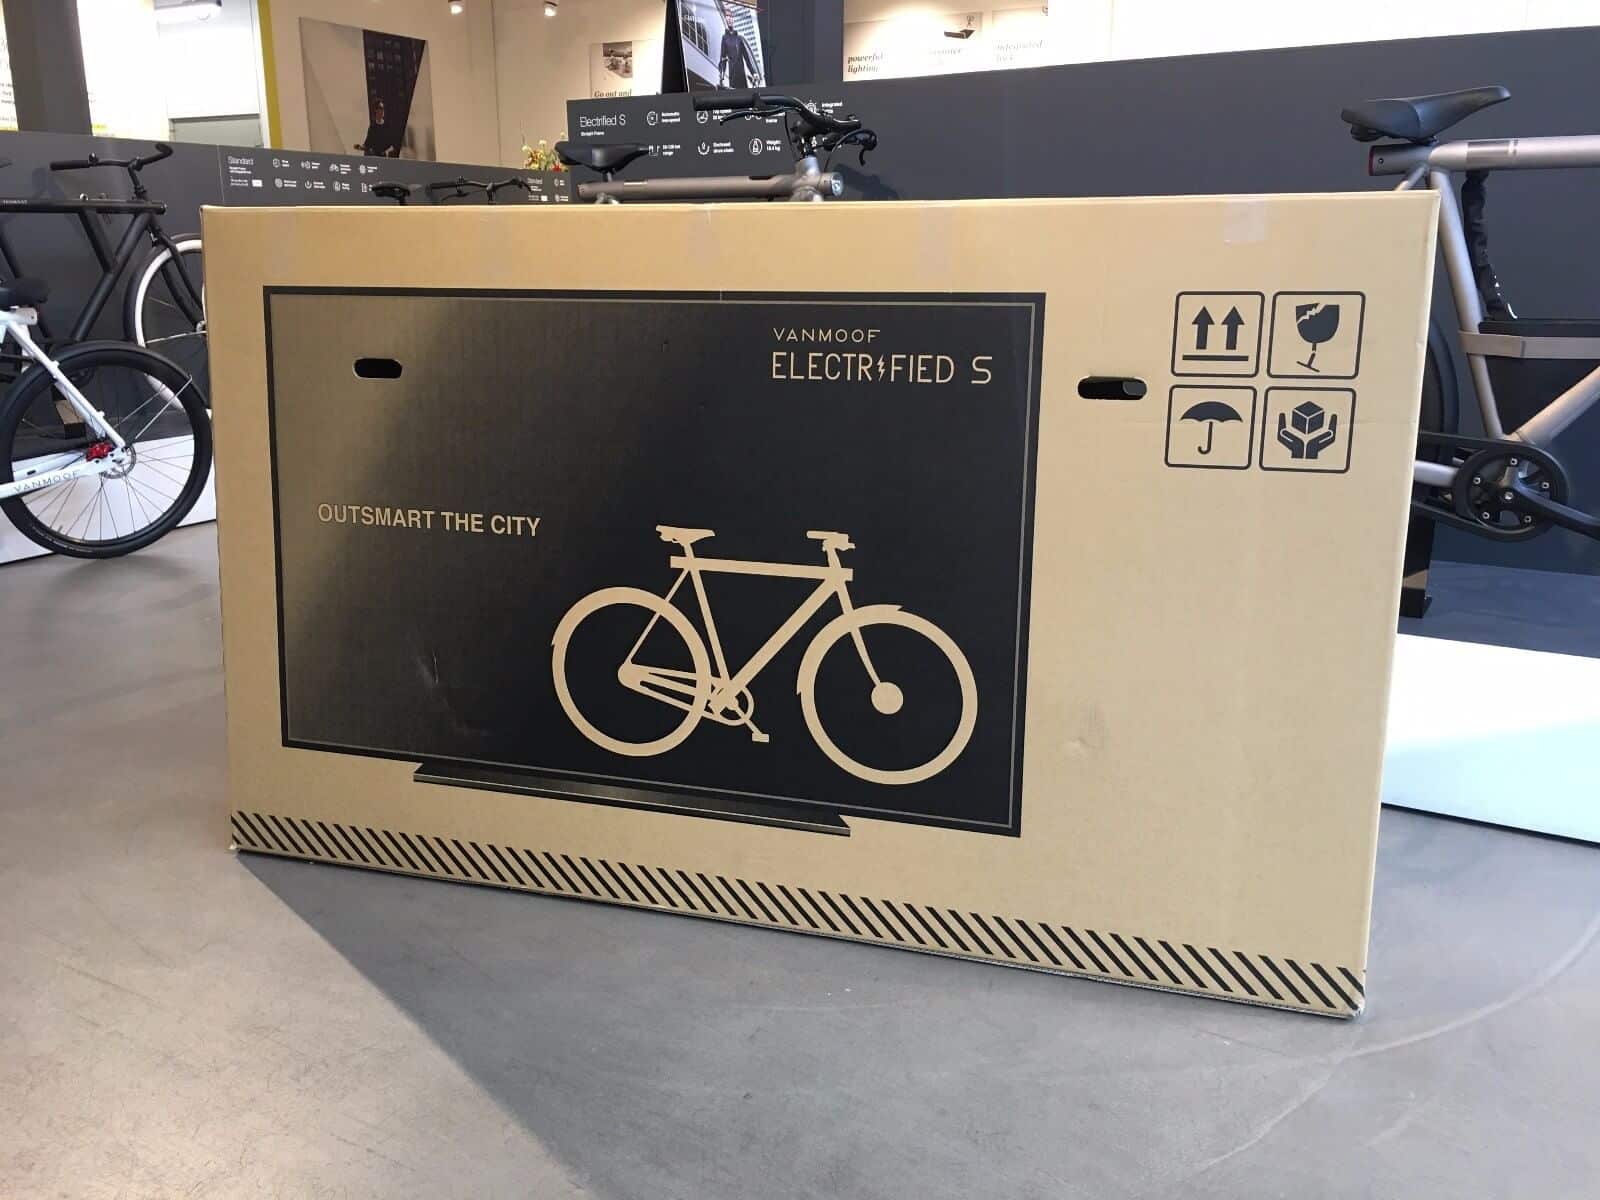 Cykel pakket i en kasse til TV